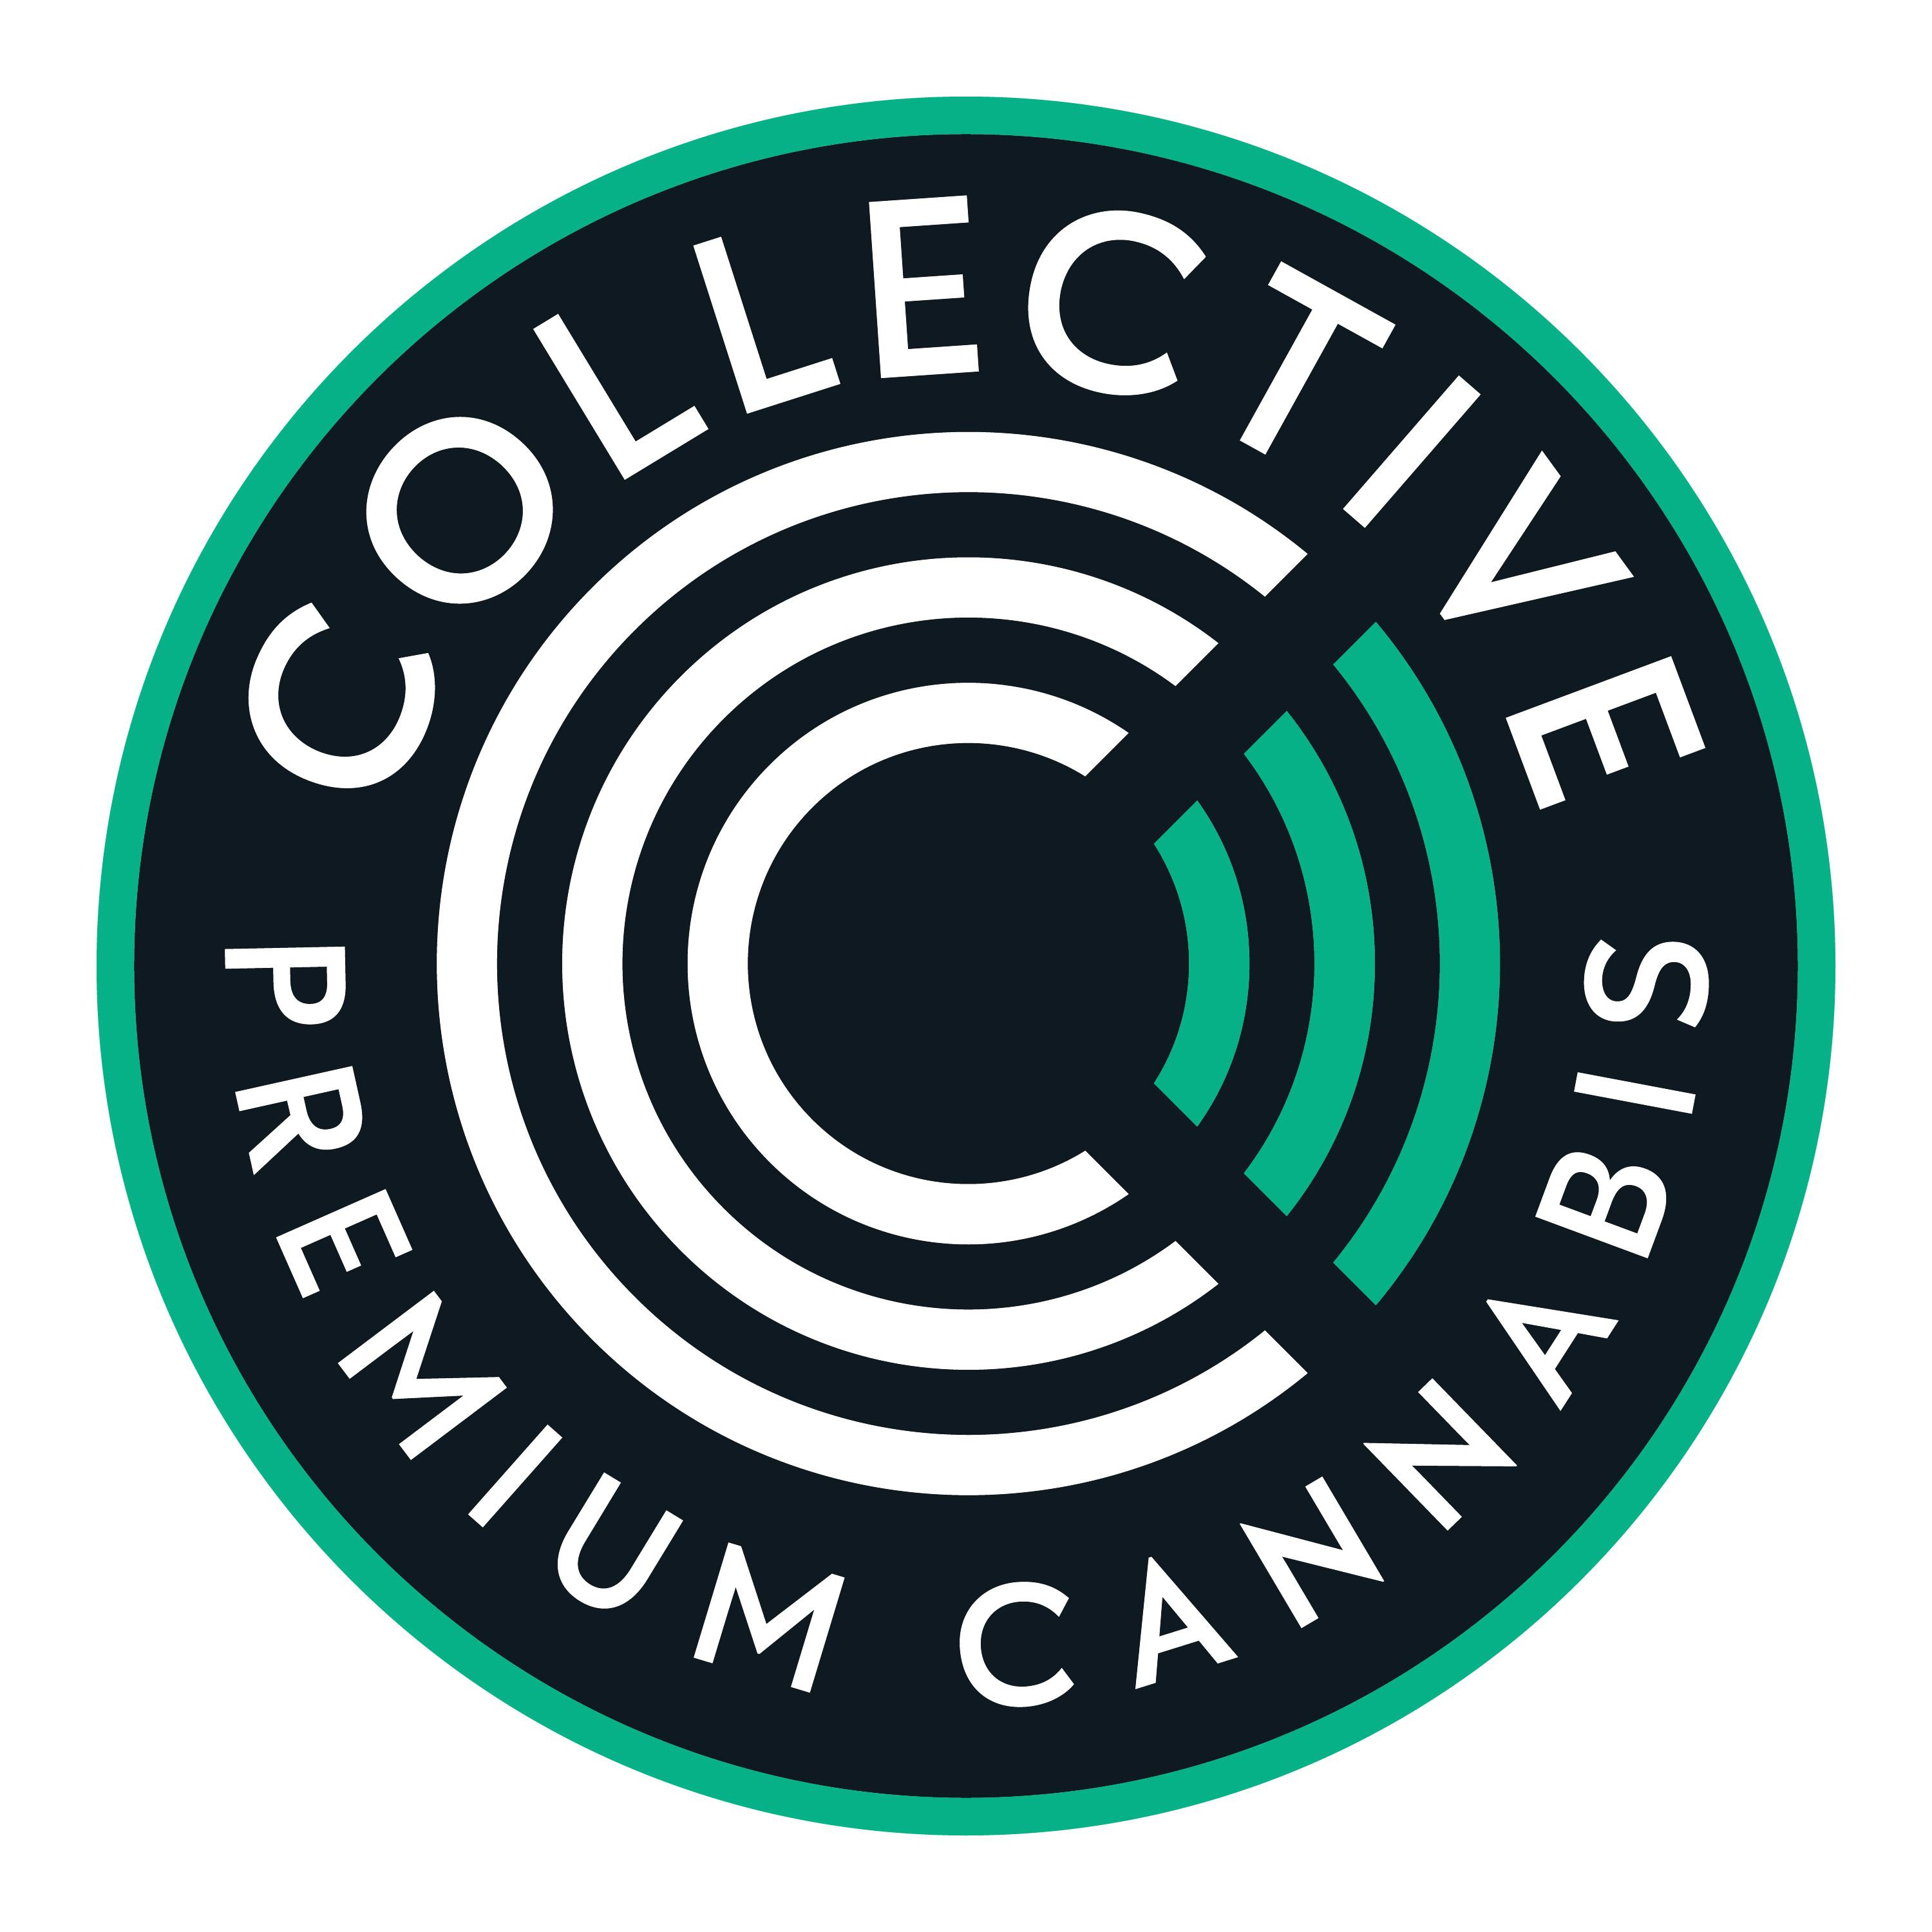 Collective Premium Cannabis Billerica-logo